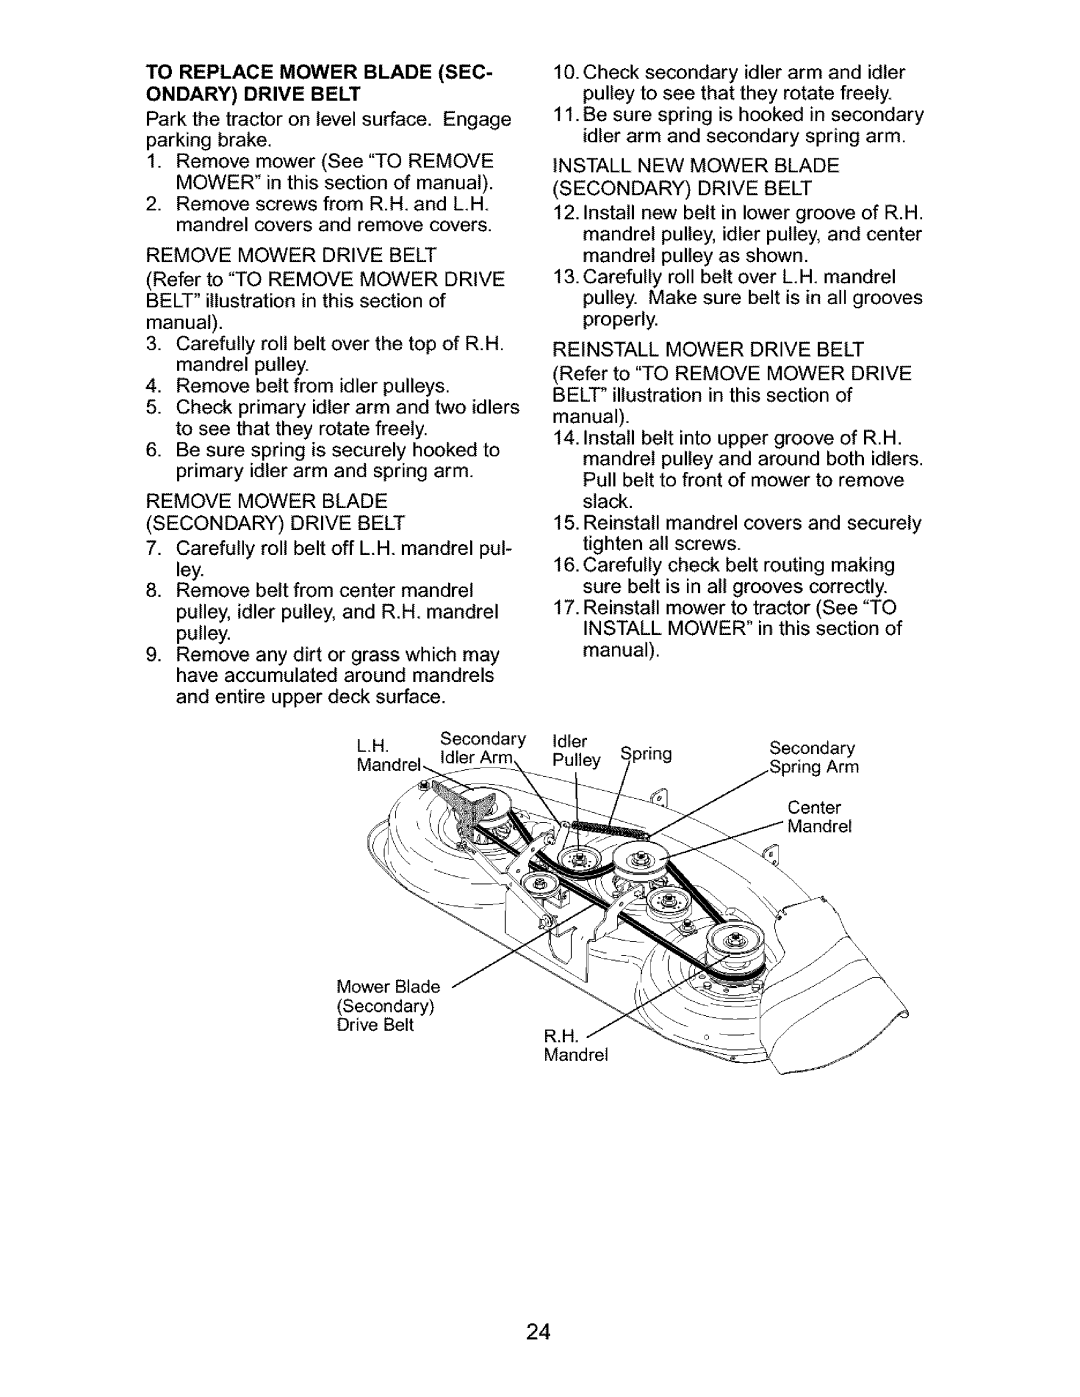 Craftsman 917.27632 owner manual To Replace Mower Blade Sec Ondary Drive Belt, parking brake 